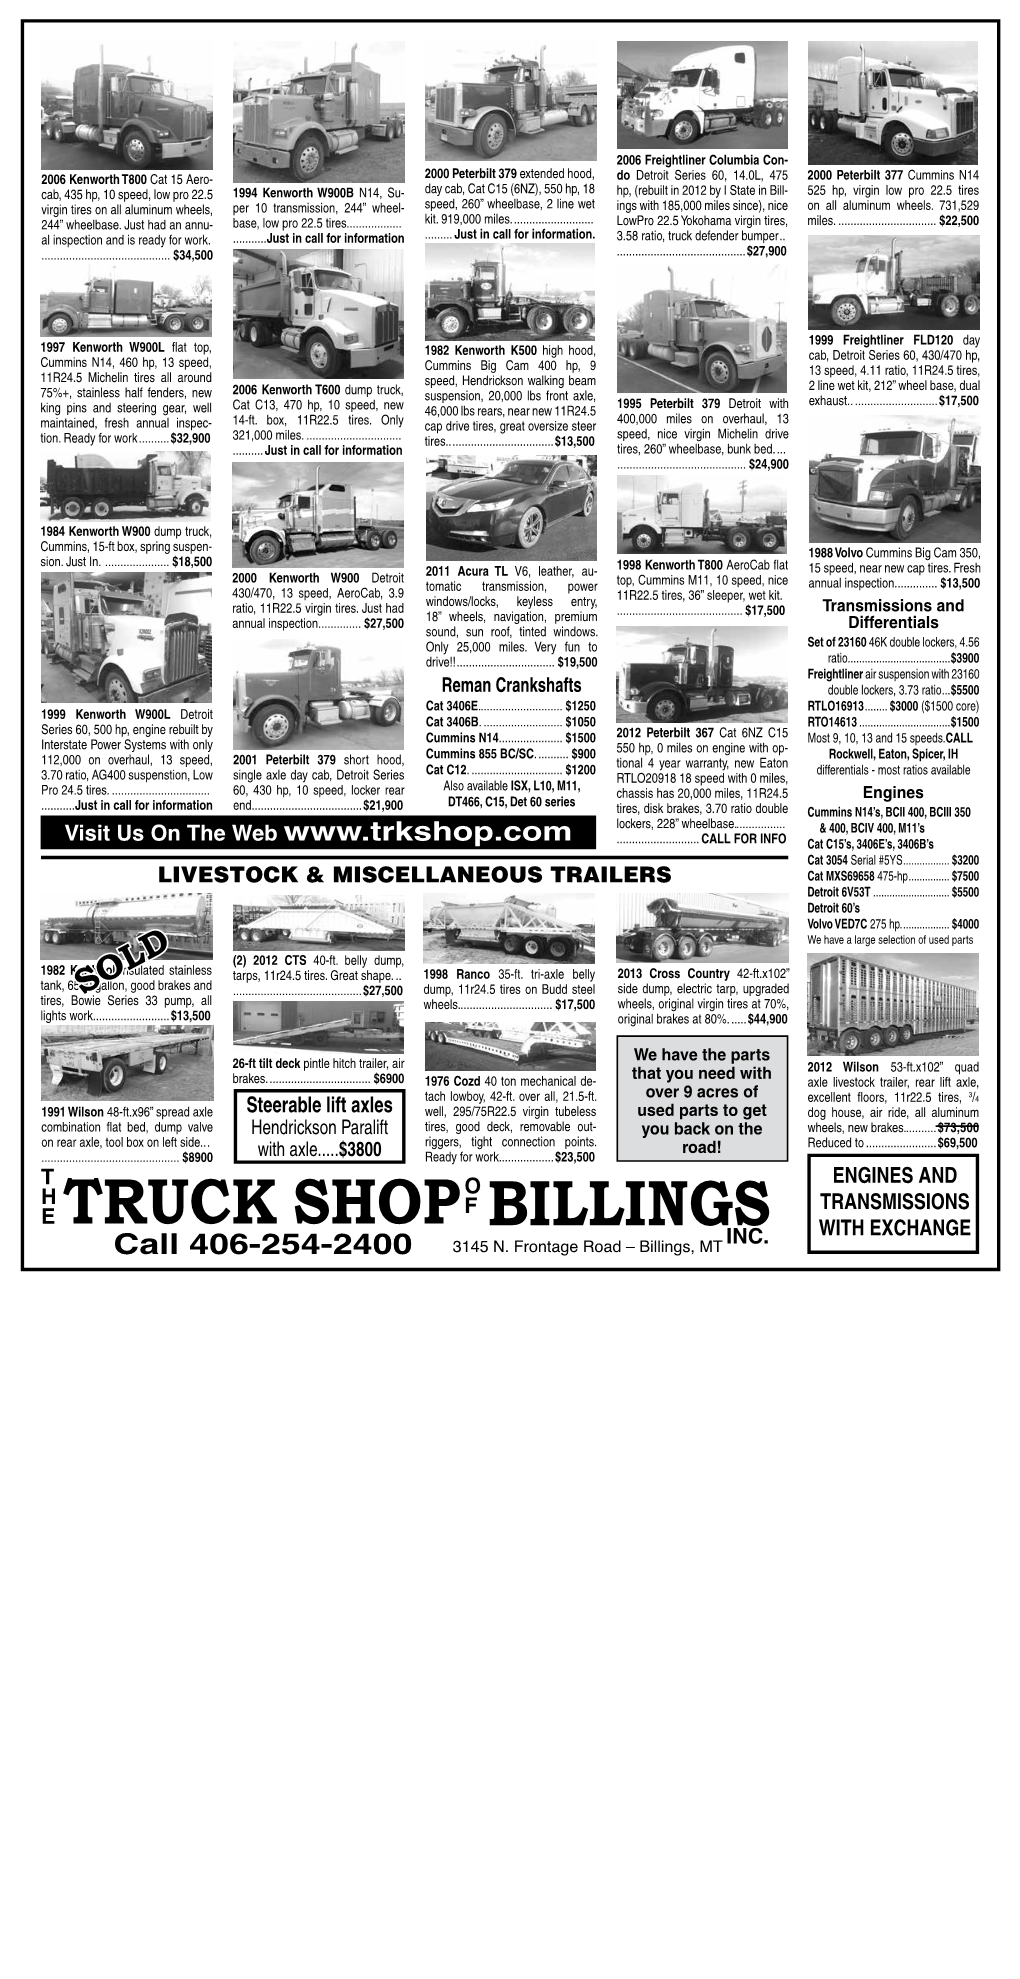 Truck Shop Billings with Exchange Inc